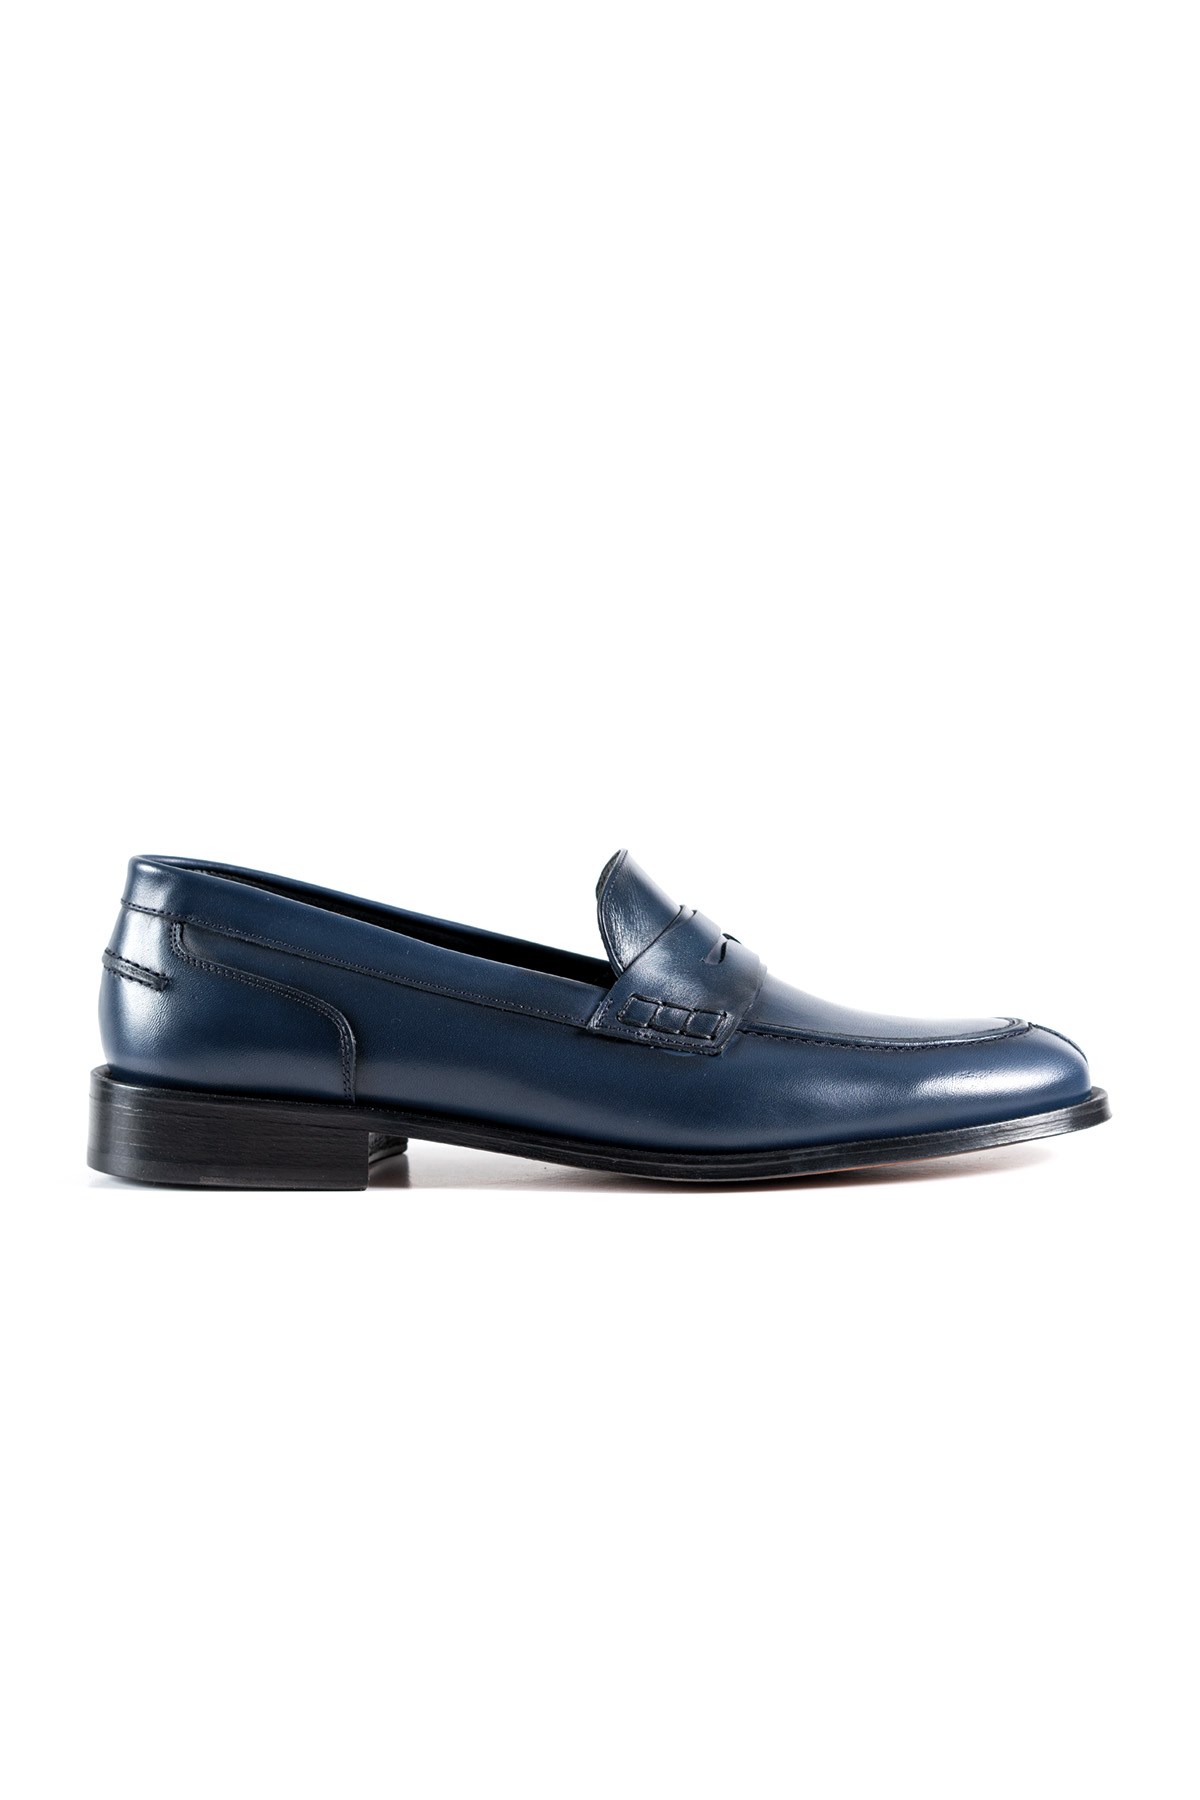 Allaturca Blue Genuine Leather Classic Men's Shoes